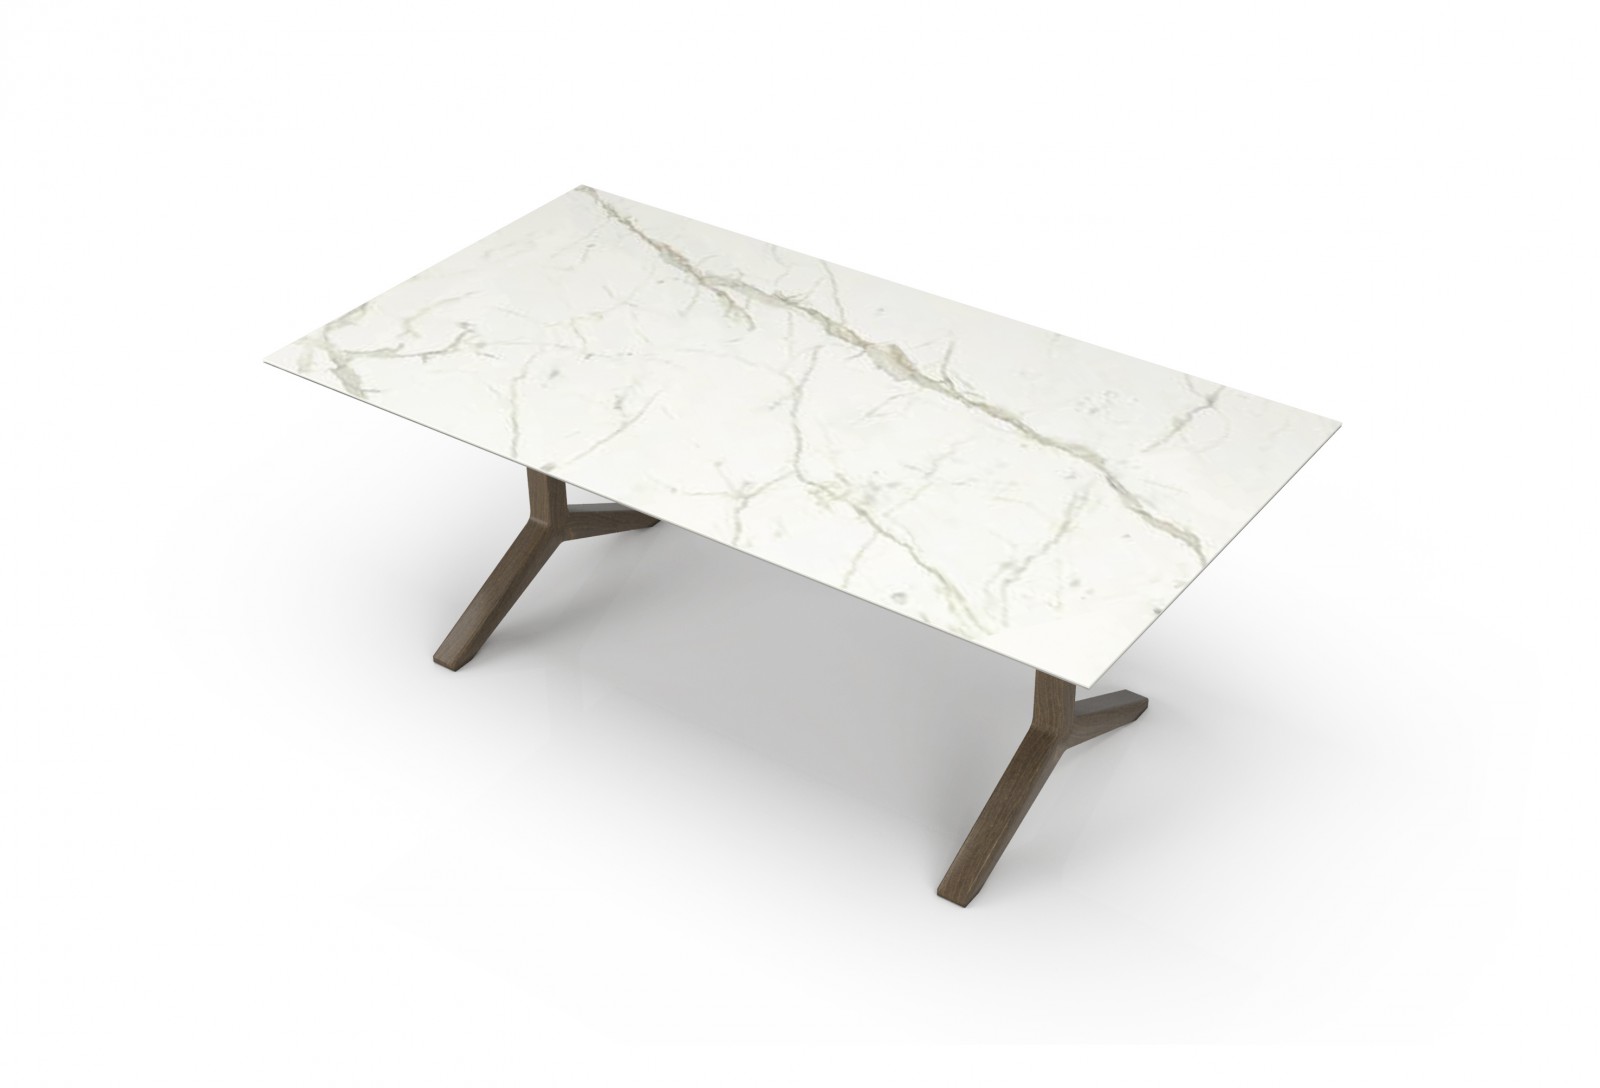 76" Ceramic top table